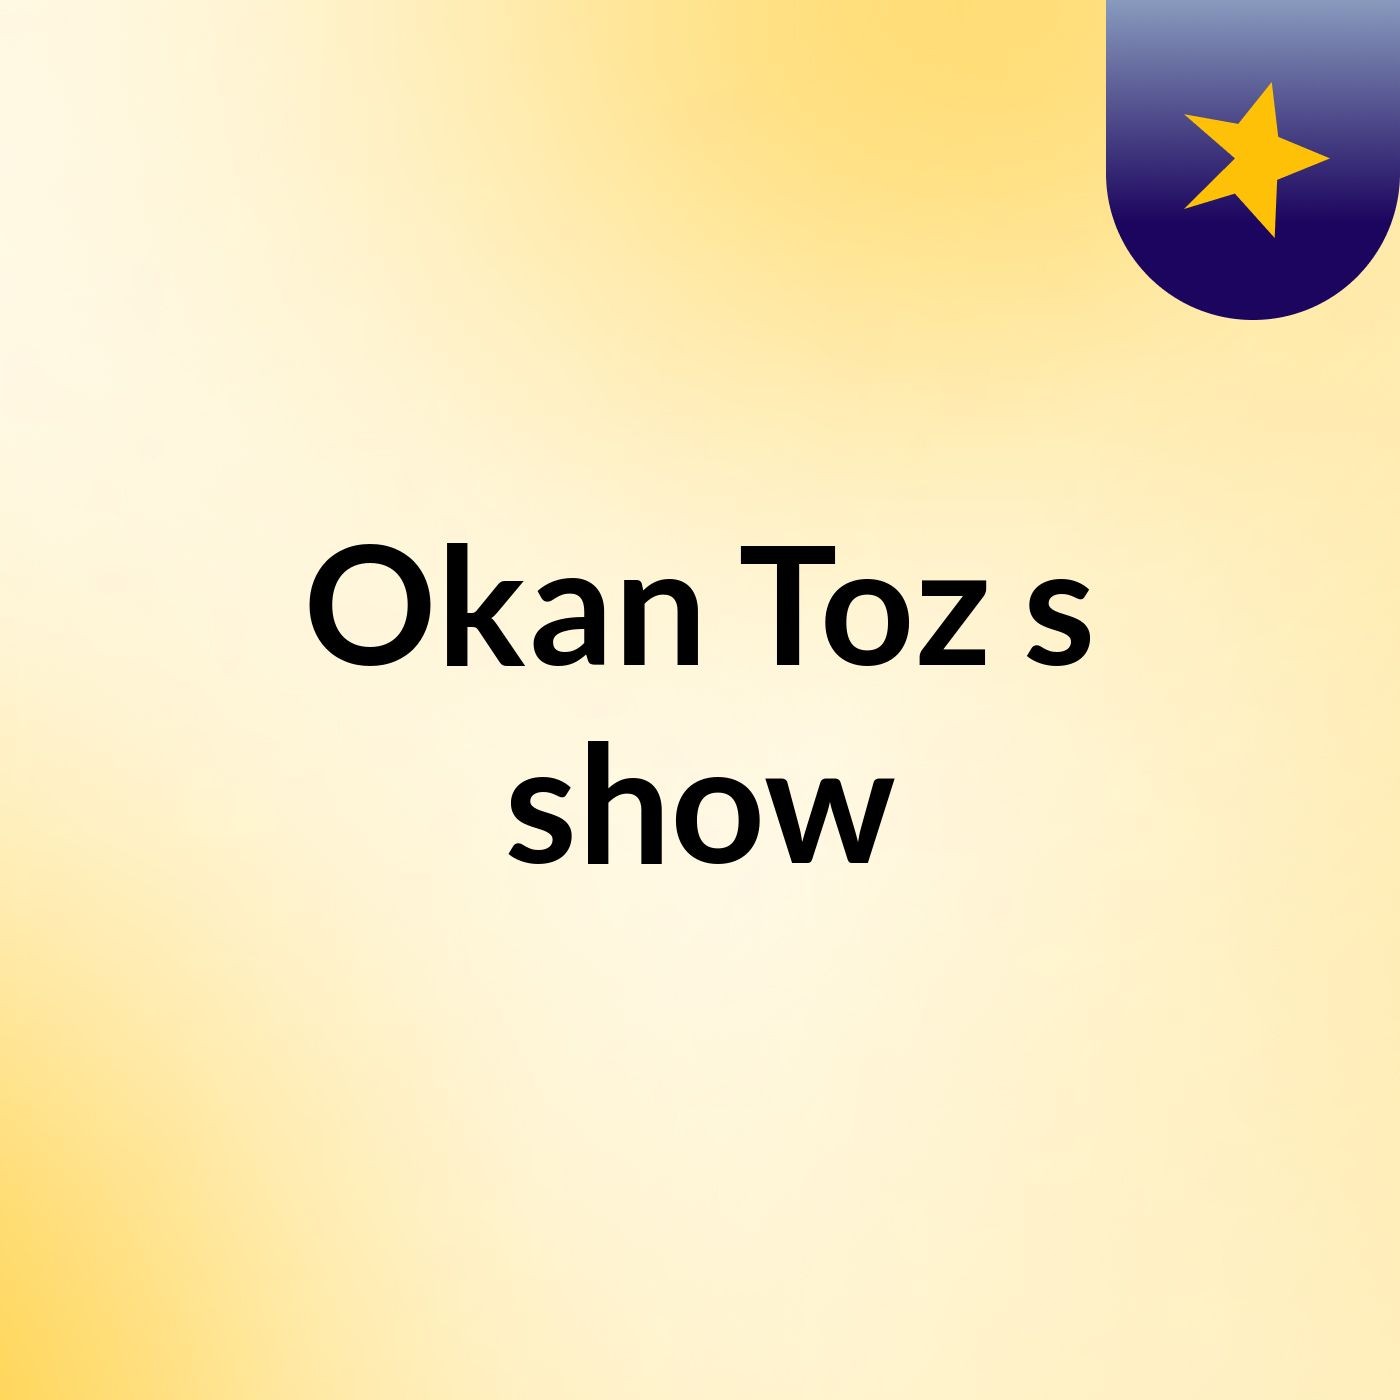 Okan Toz's show